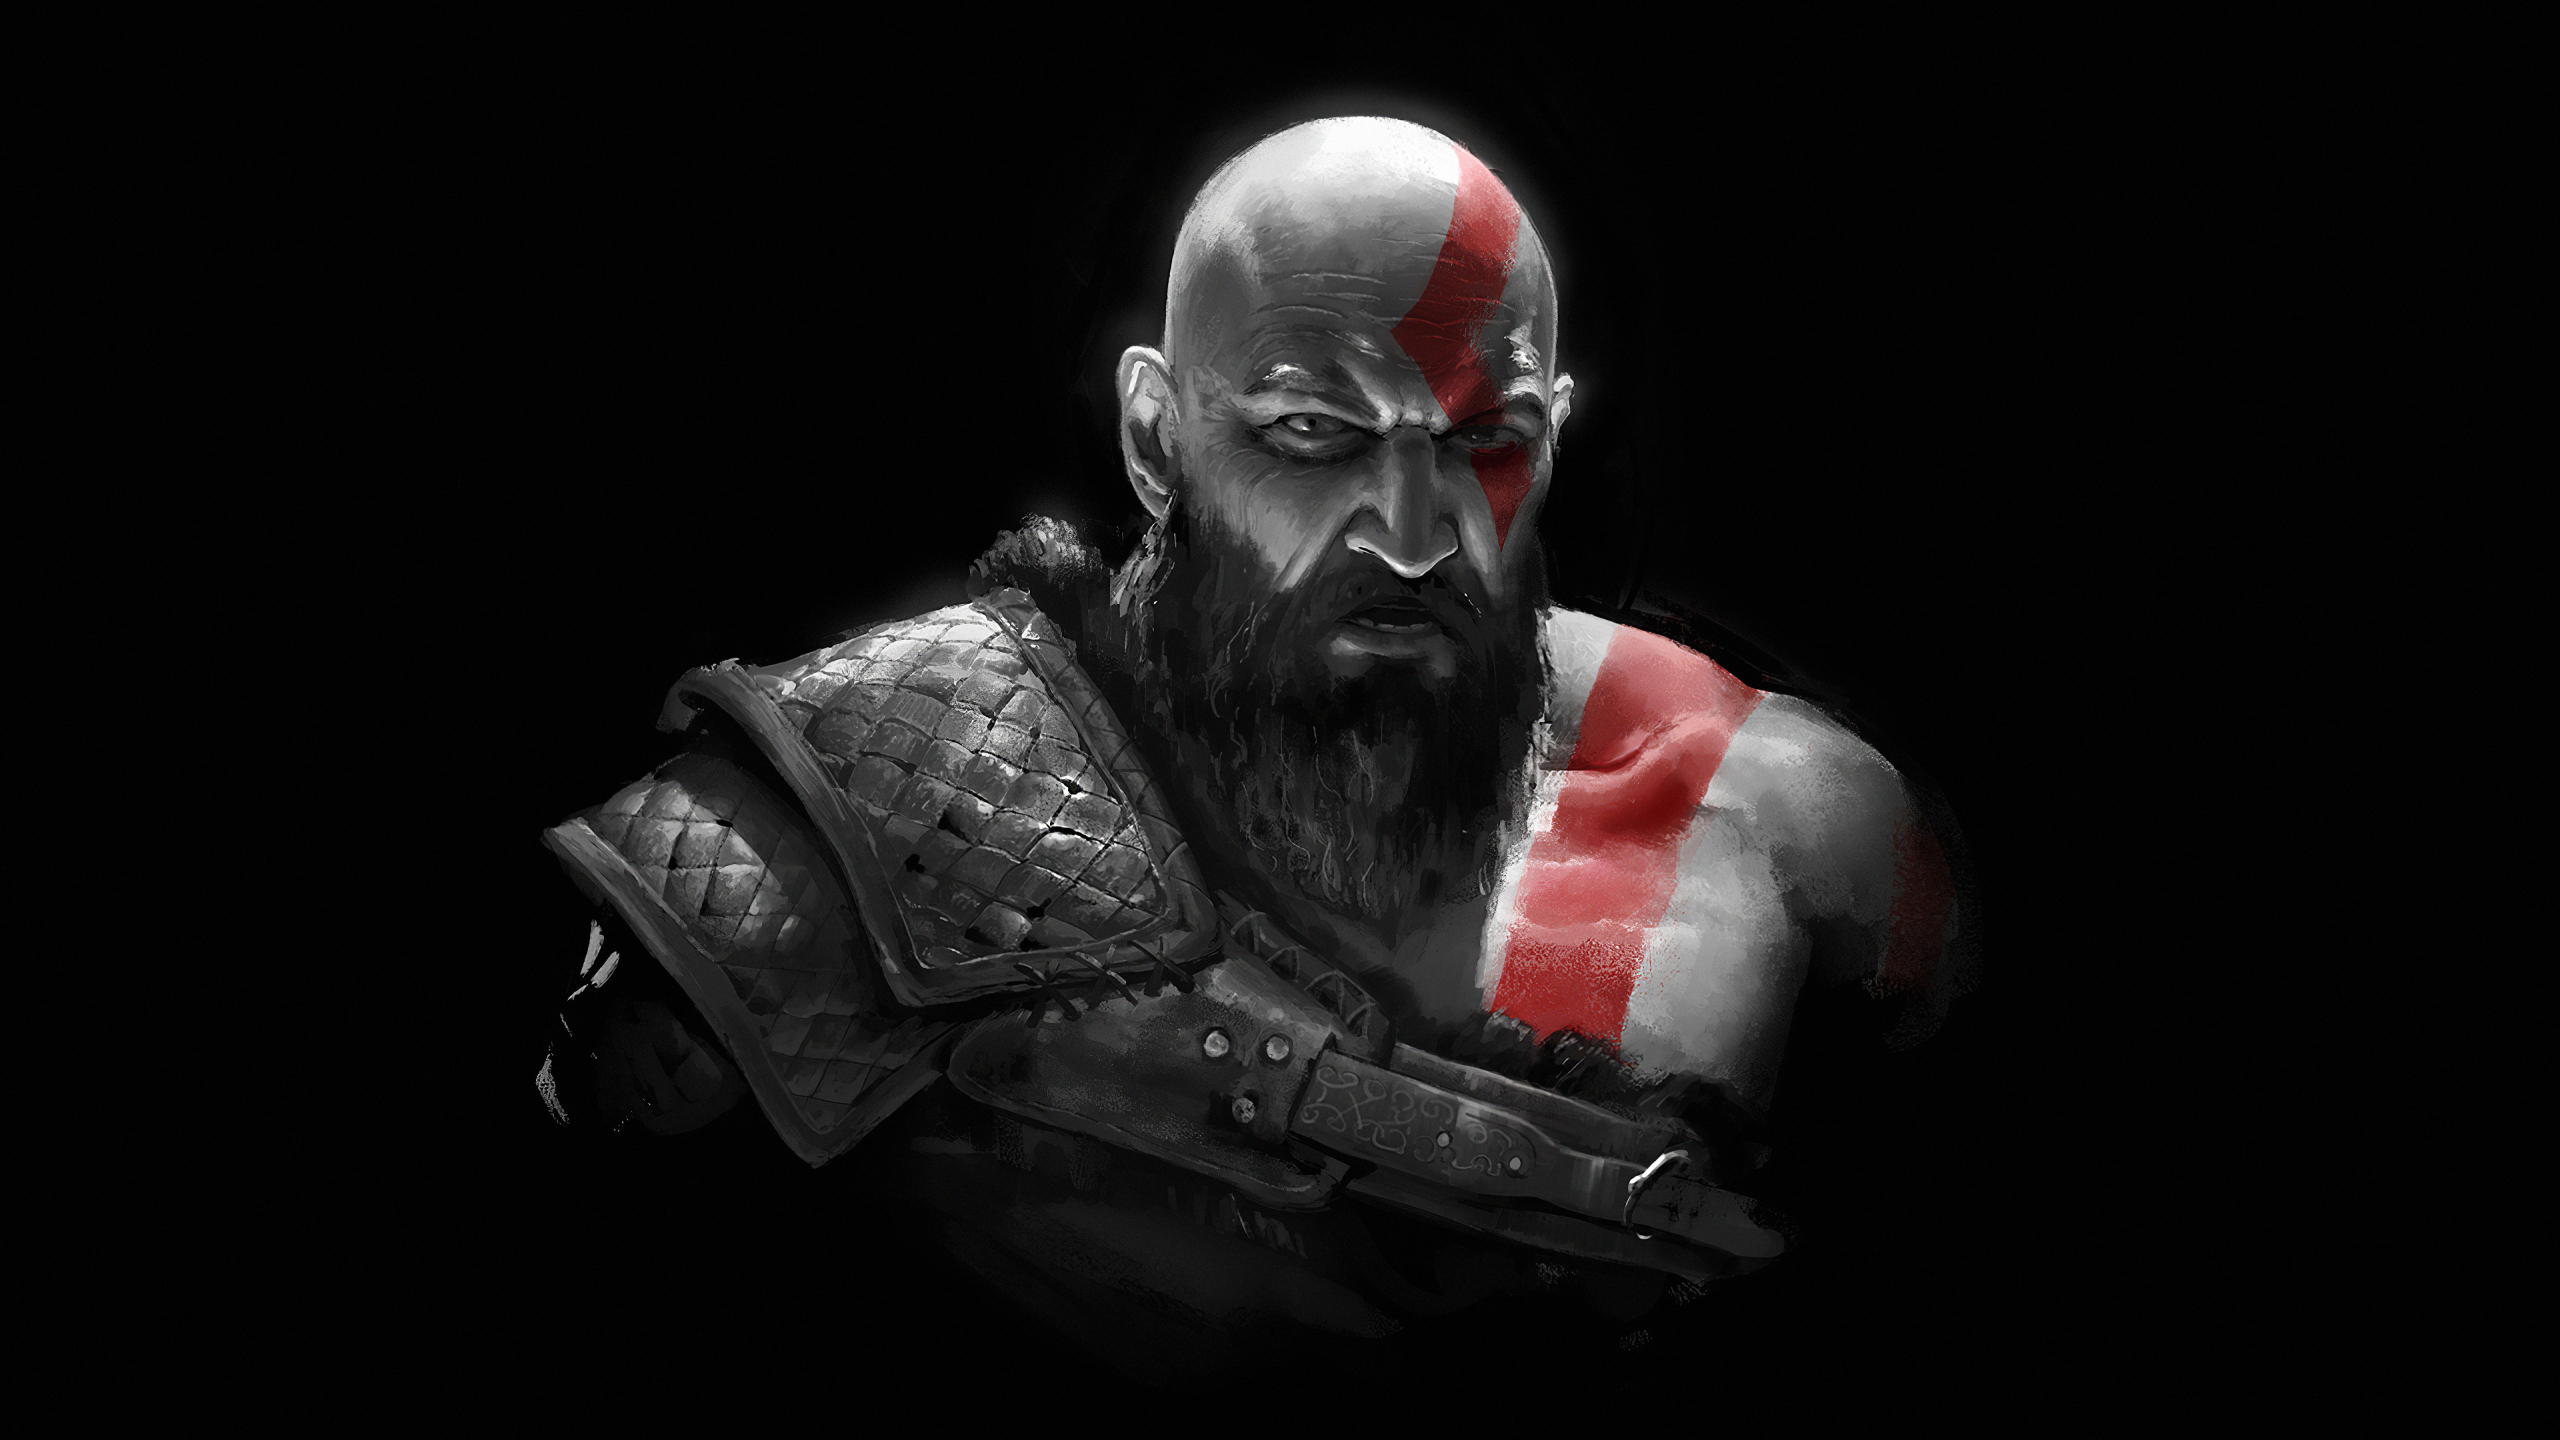 download free gow 3 kratos